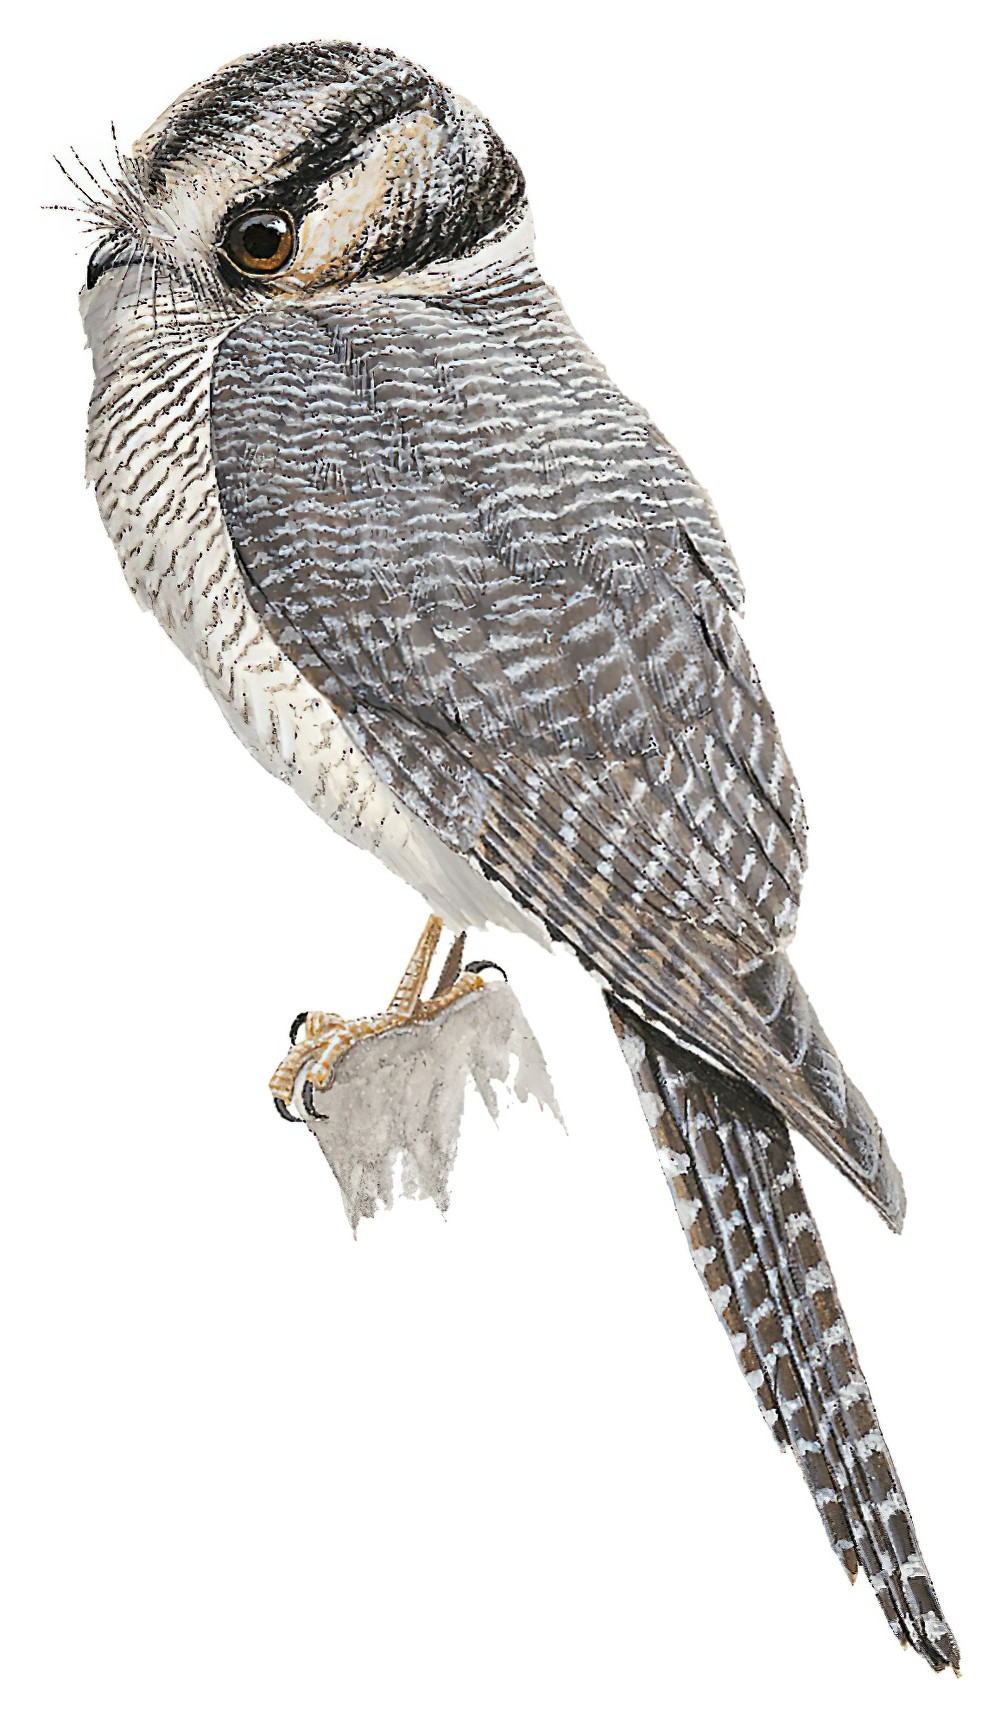 Australian Owlet-nightjar / Aegotheles cristatus